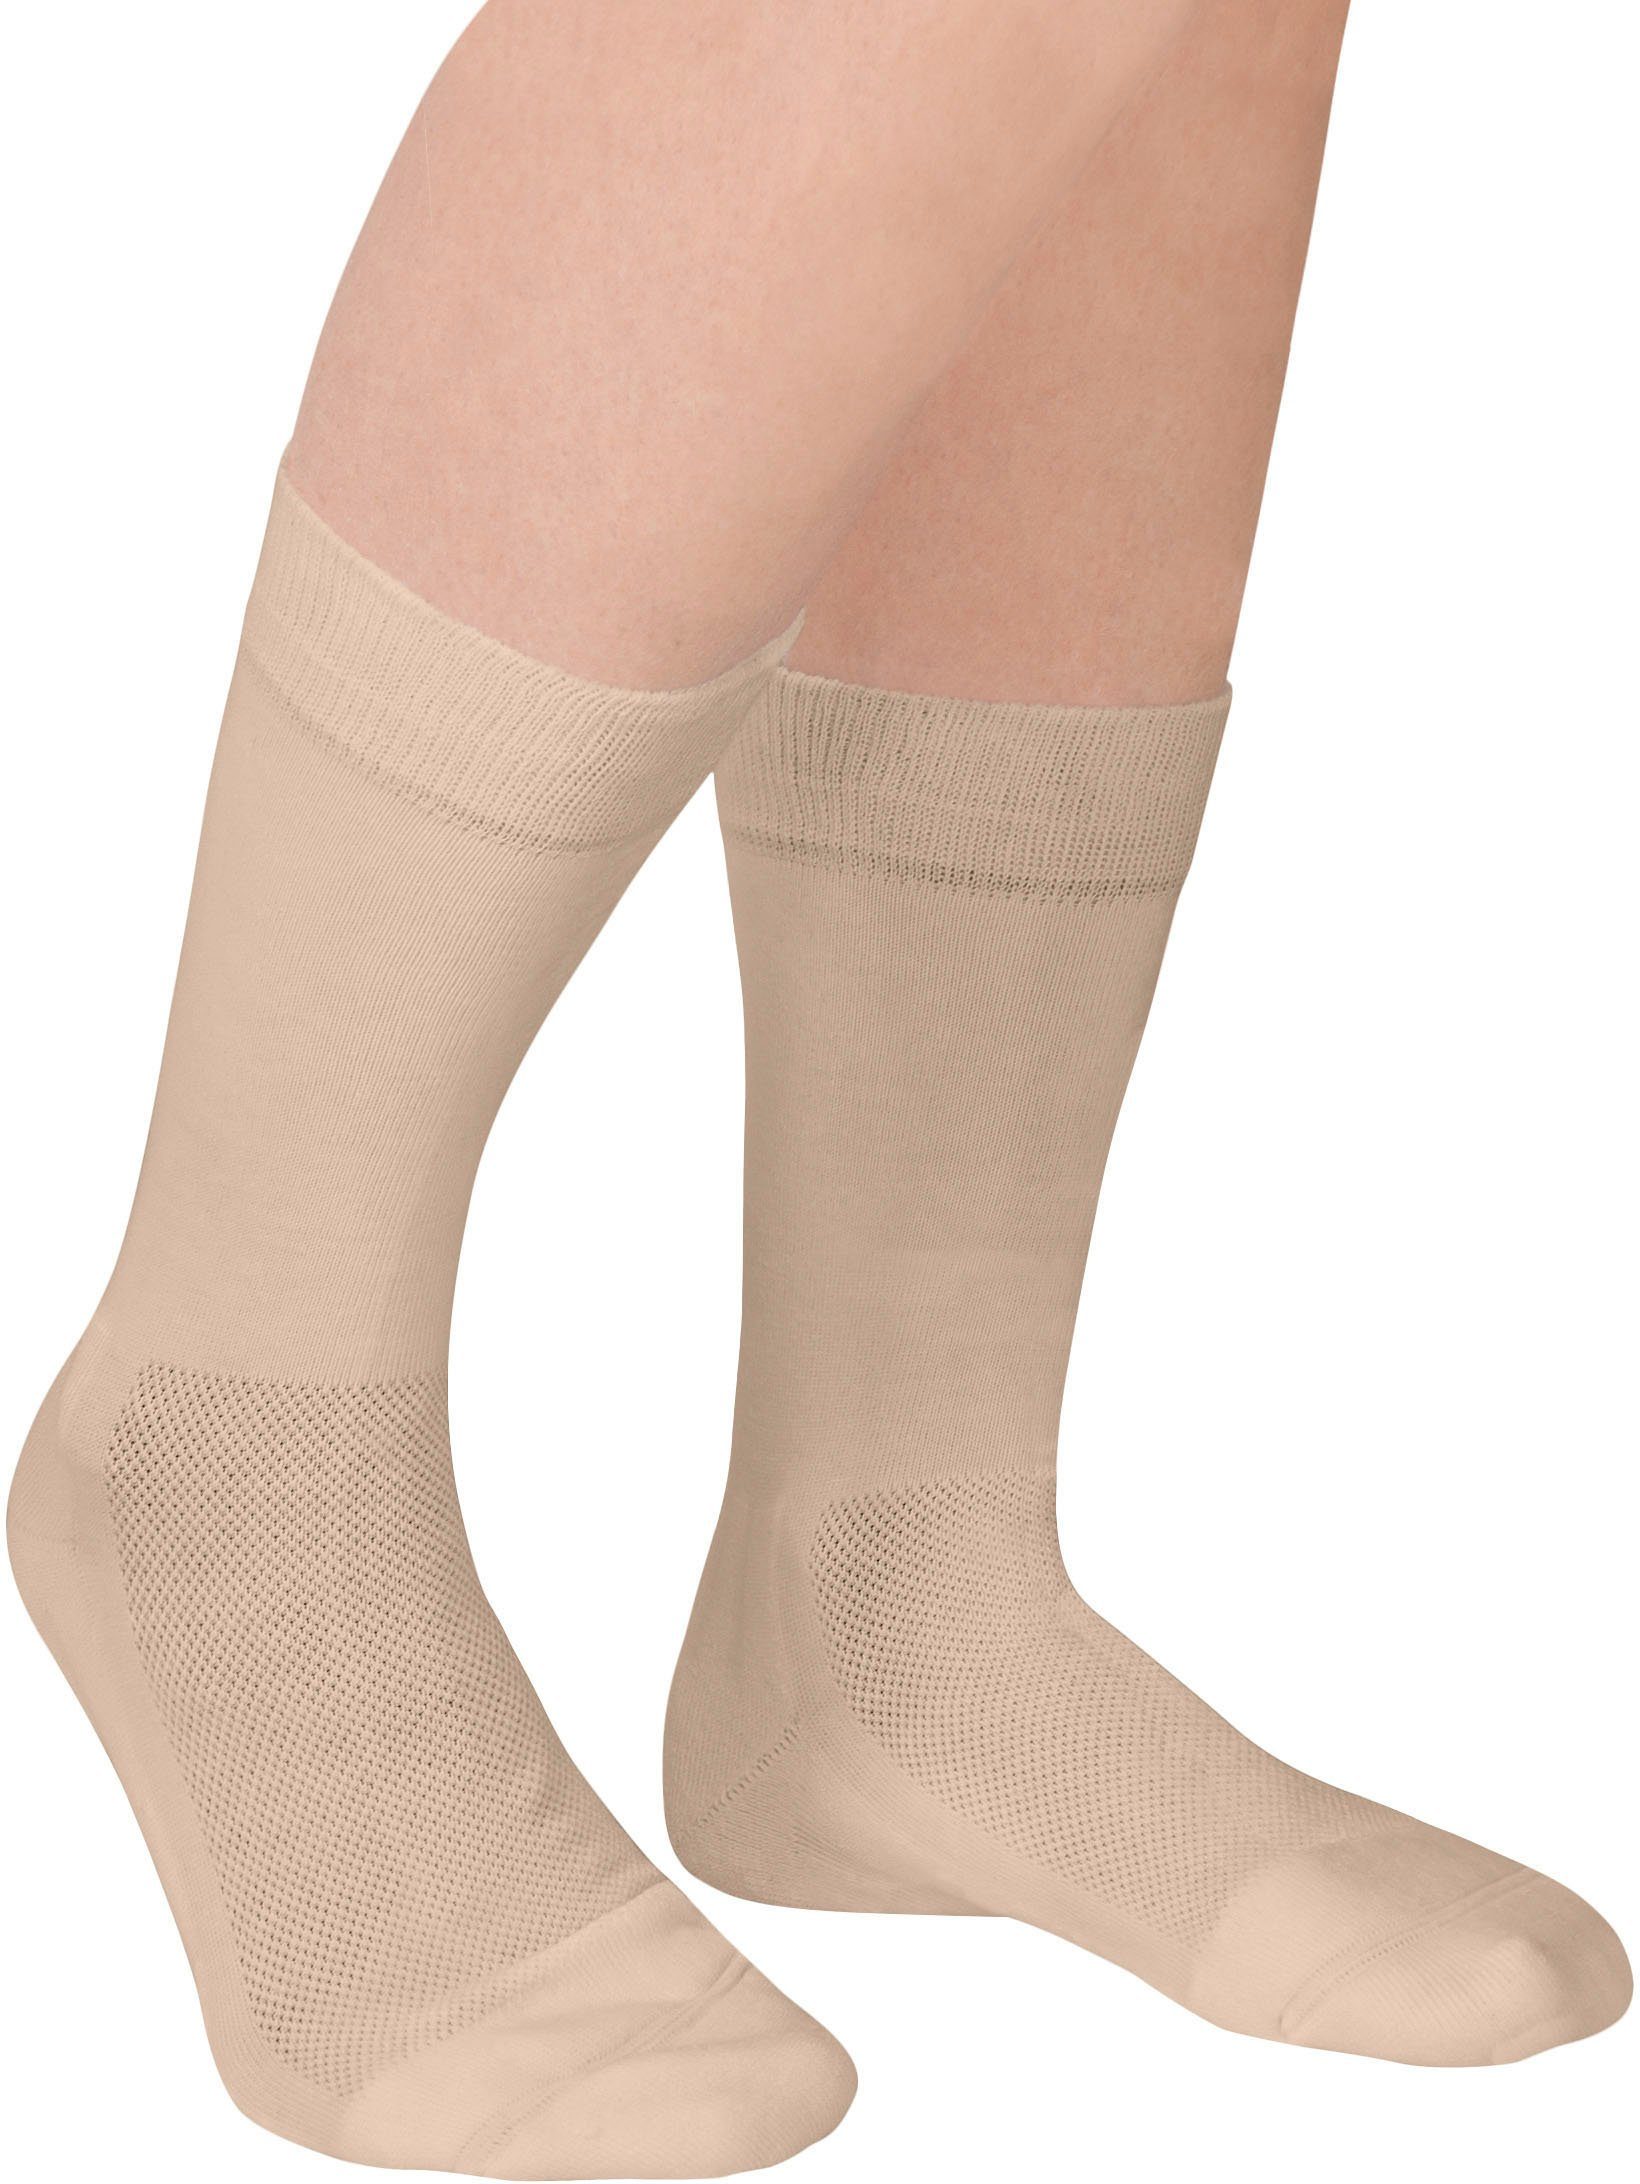 Fußgut Diabetikersocken Venenfeund beige Socken Sensitiv (2-Paar)